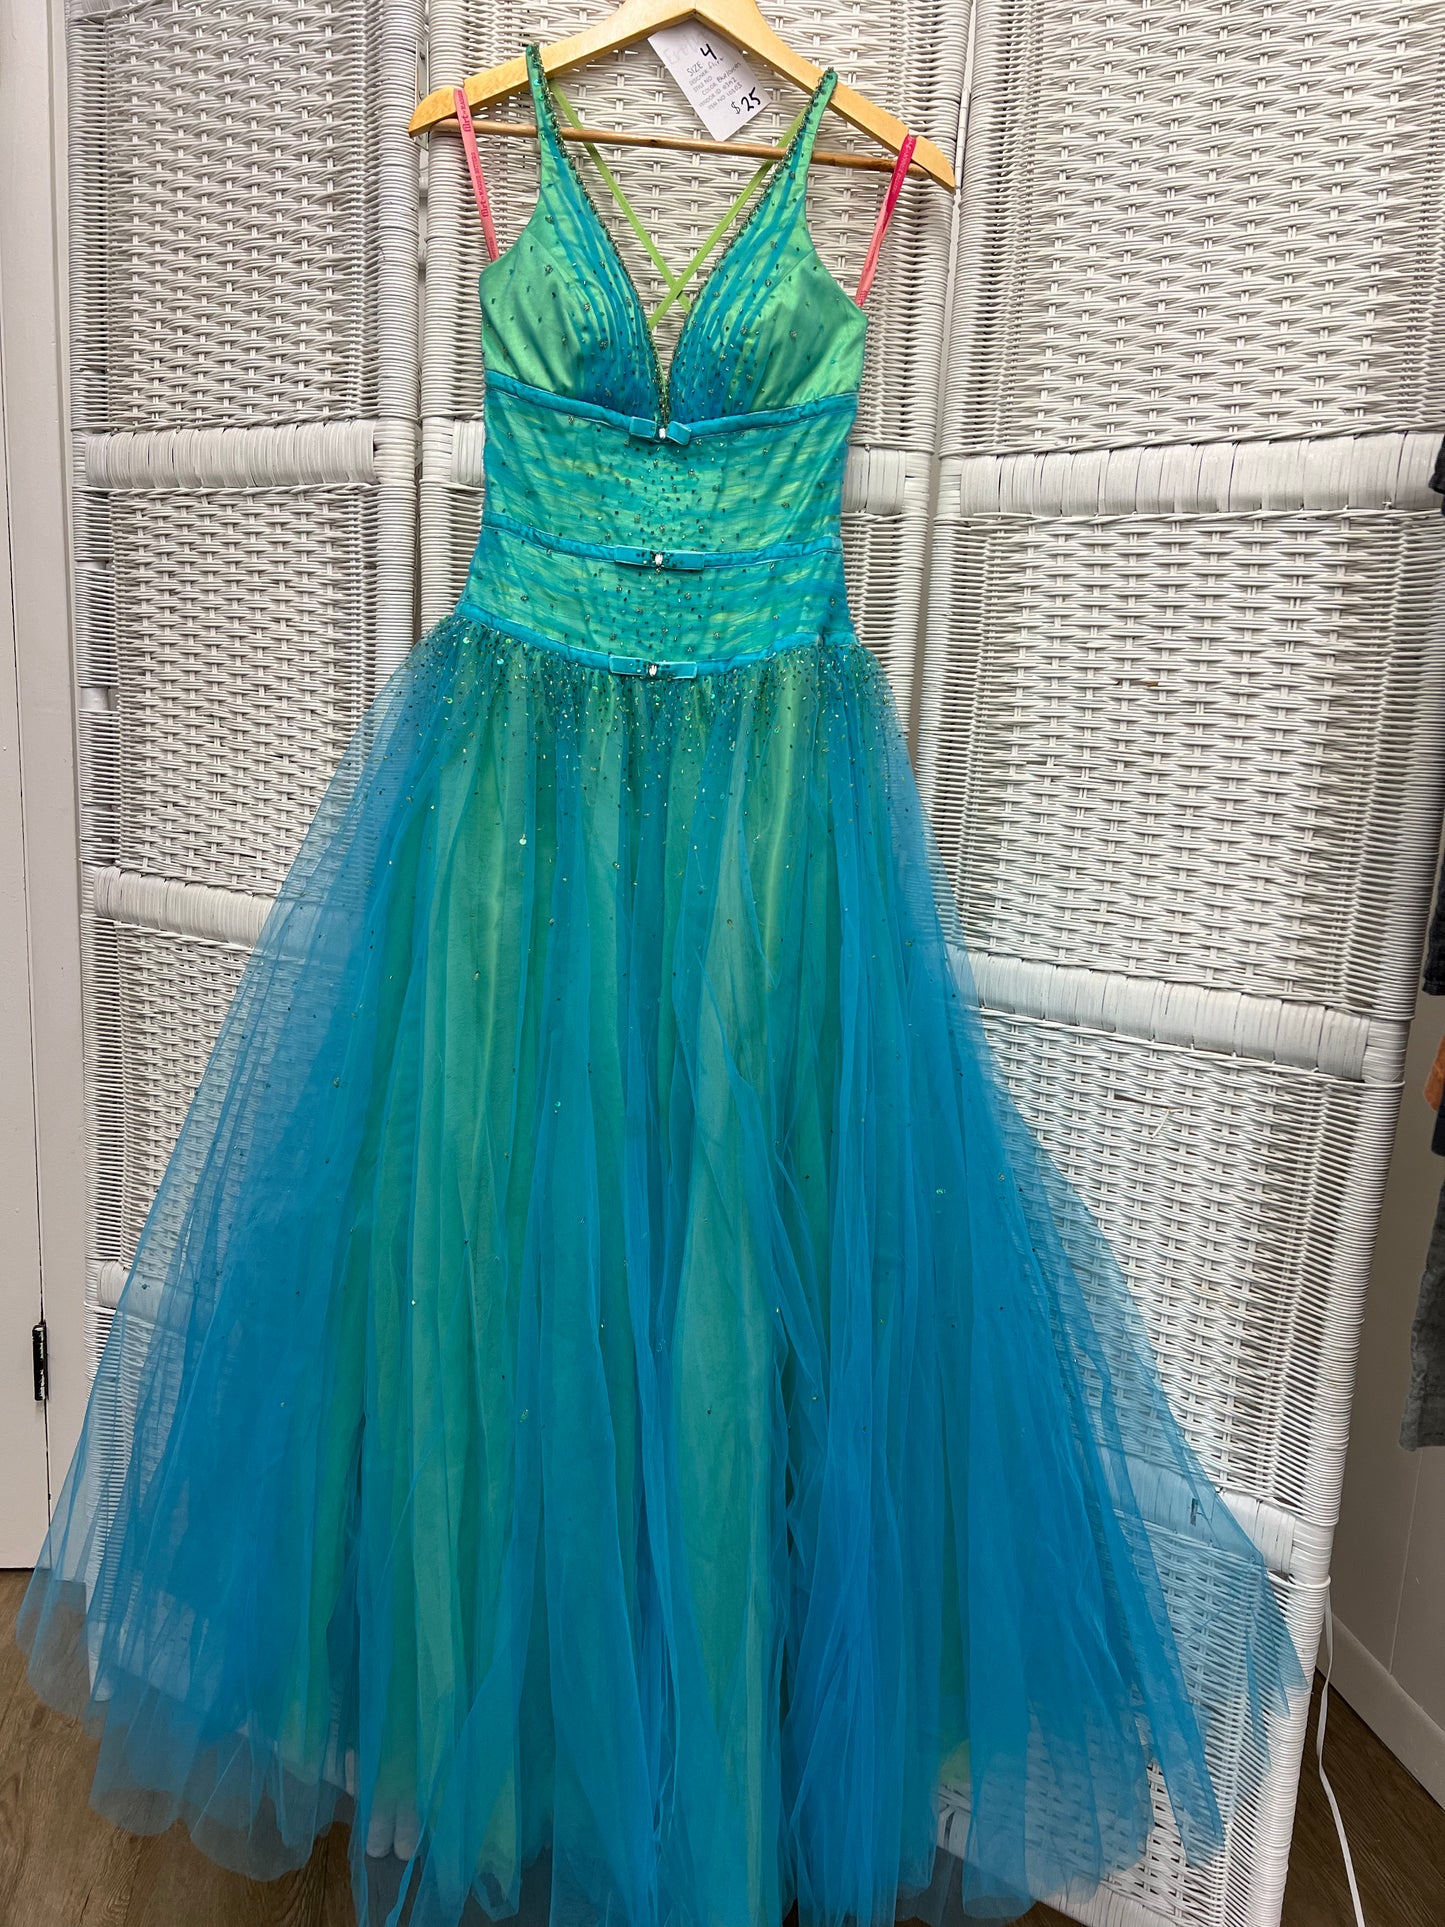 Flirt, Size 4, Blue Green Retro Prom Dress